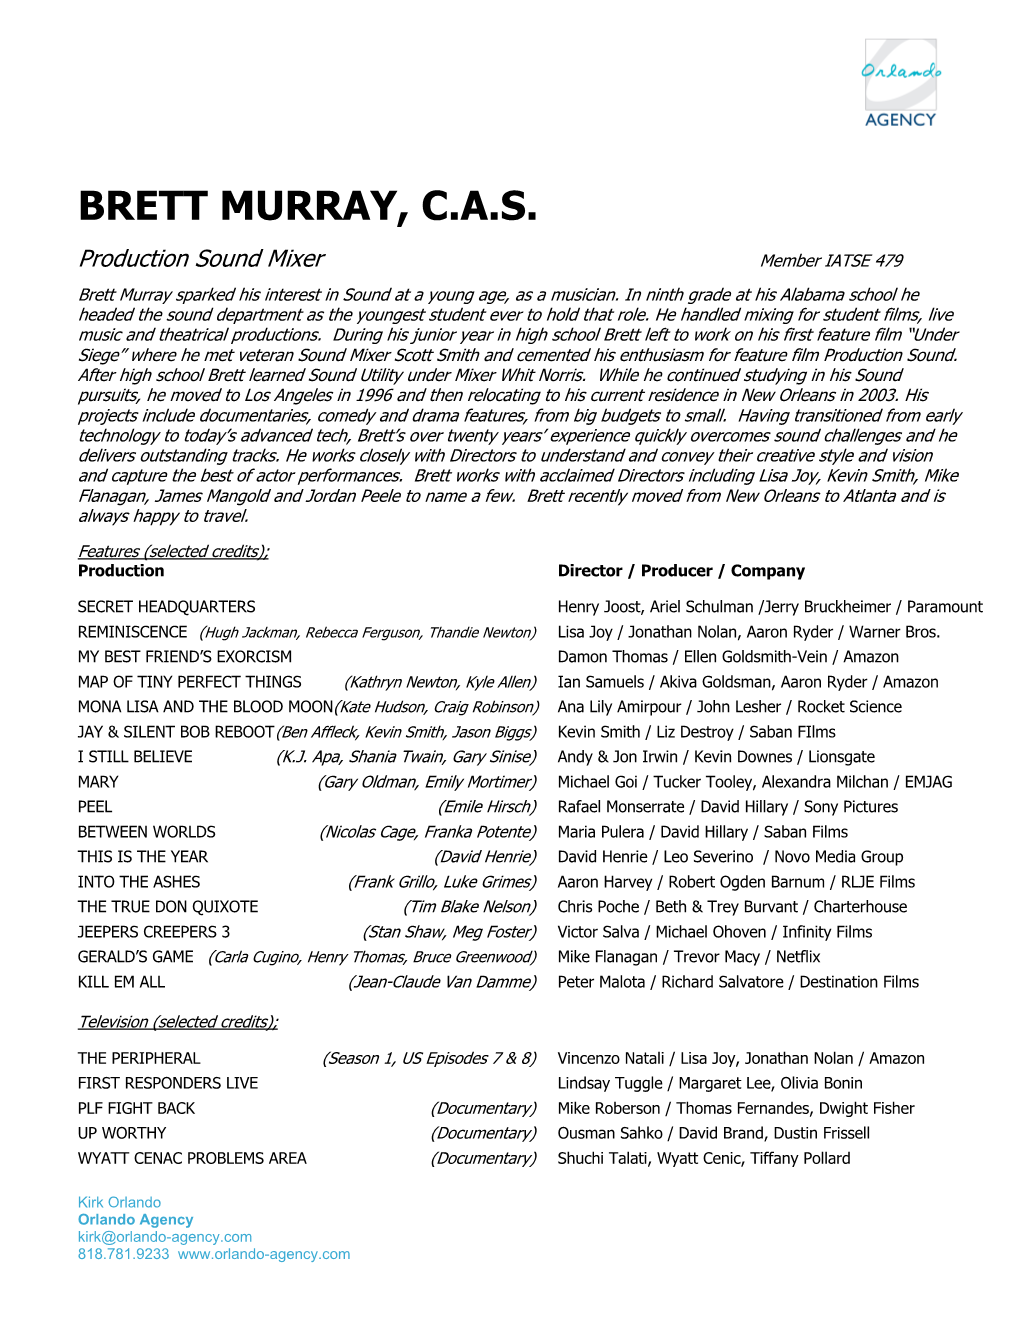 Brett Murray, C.A.S